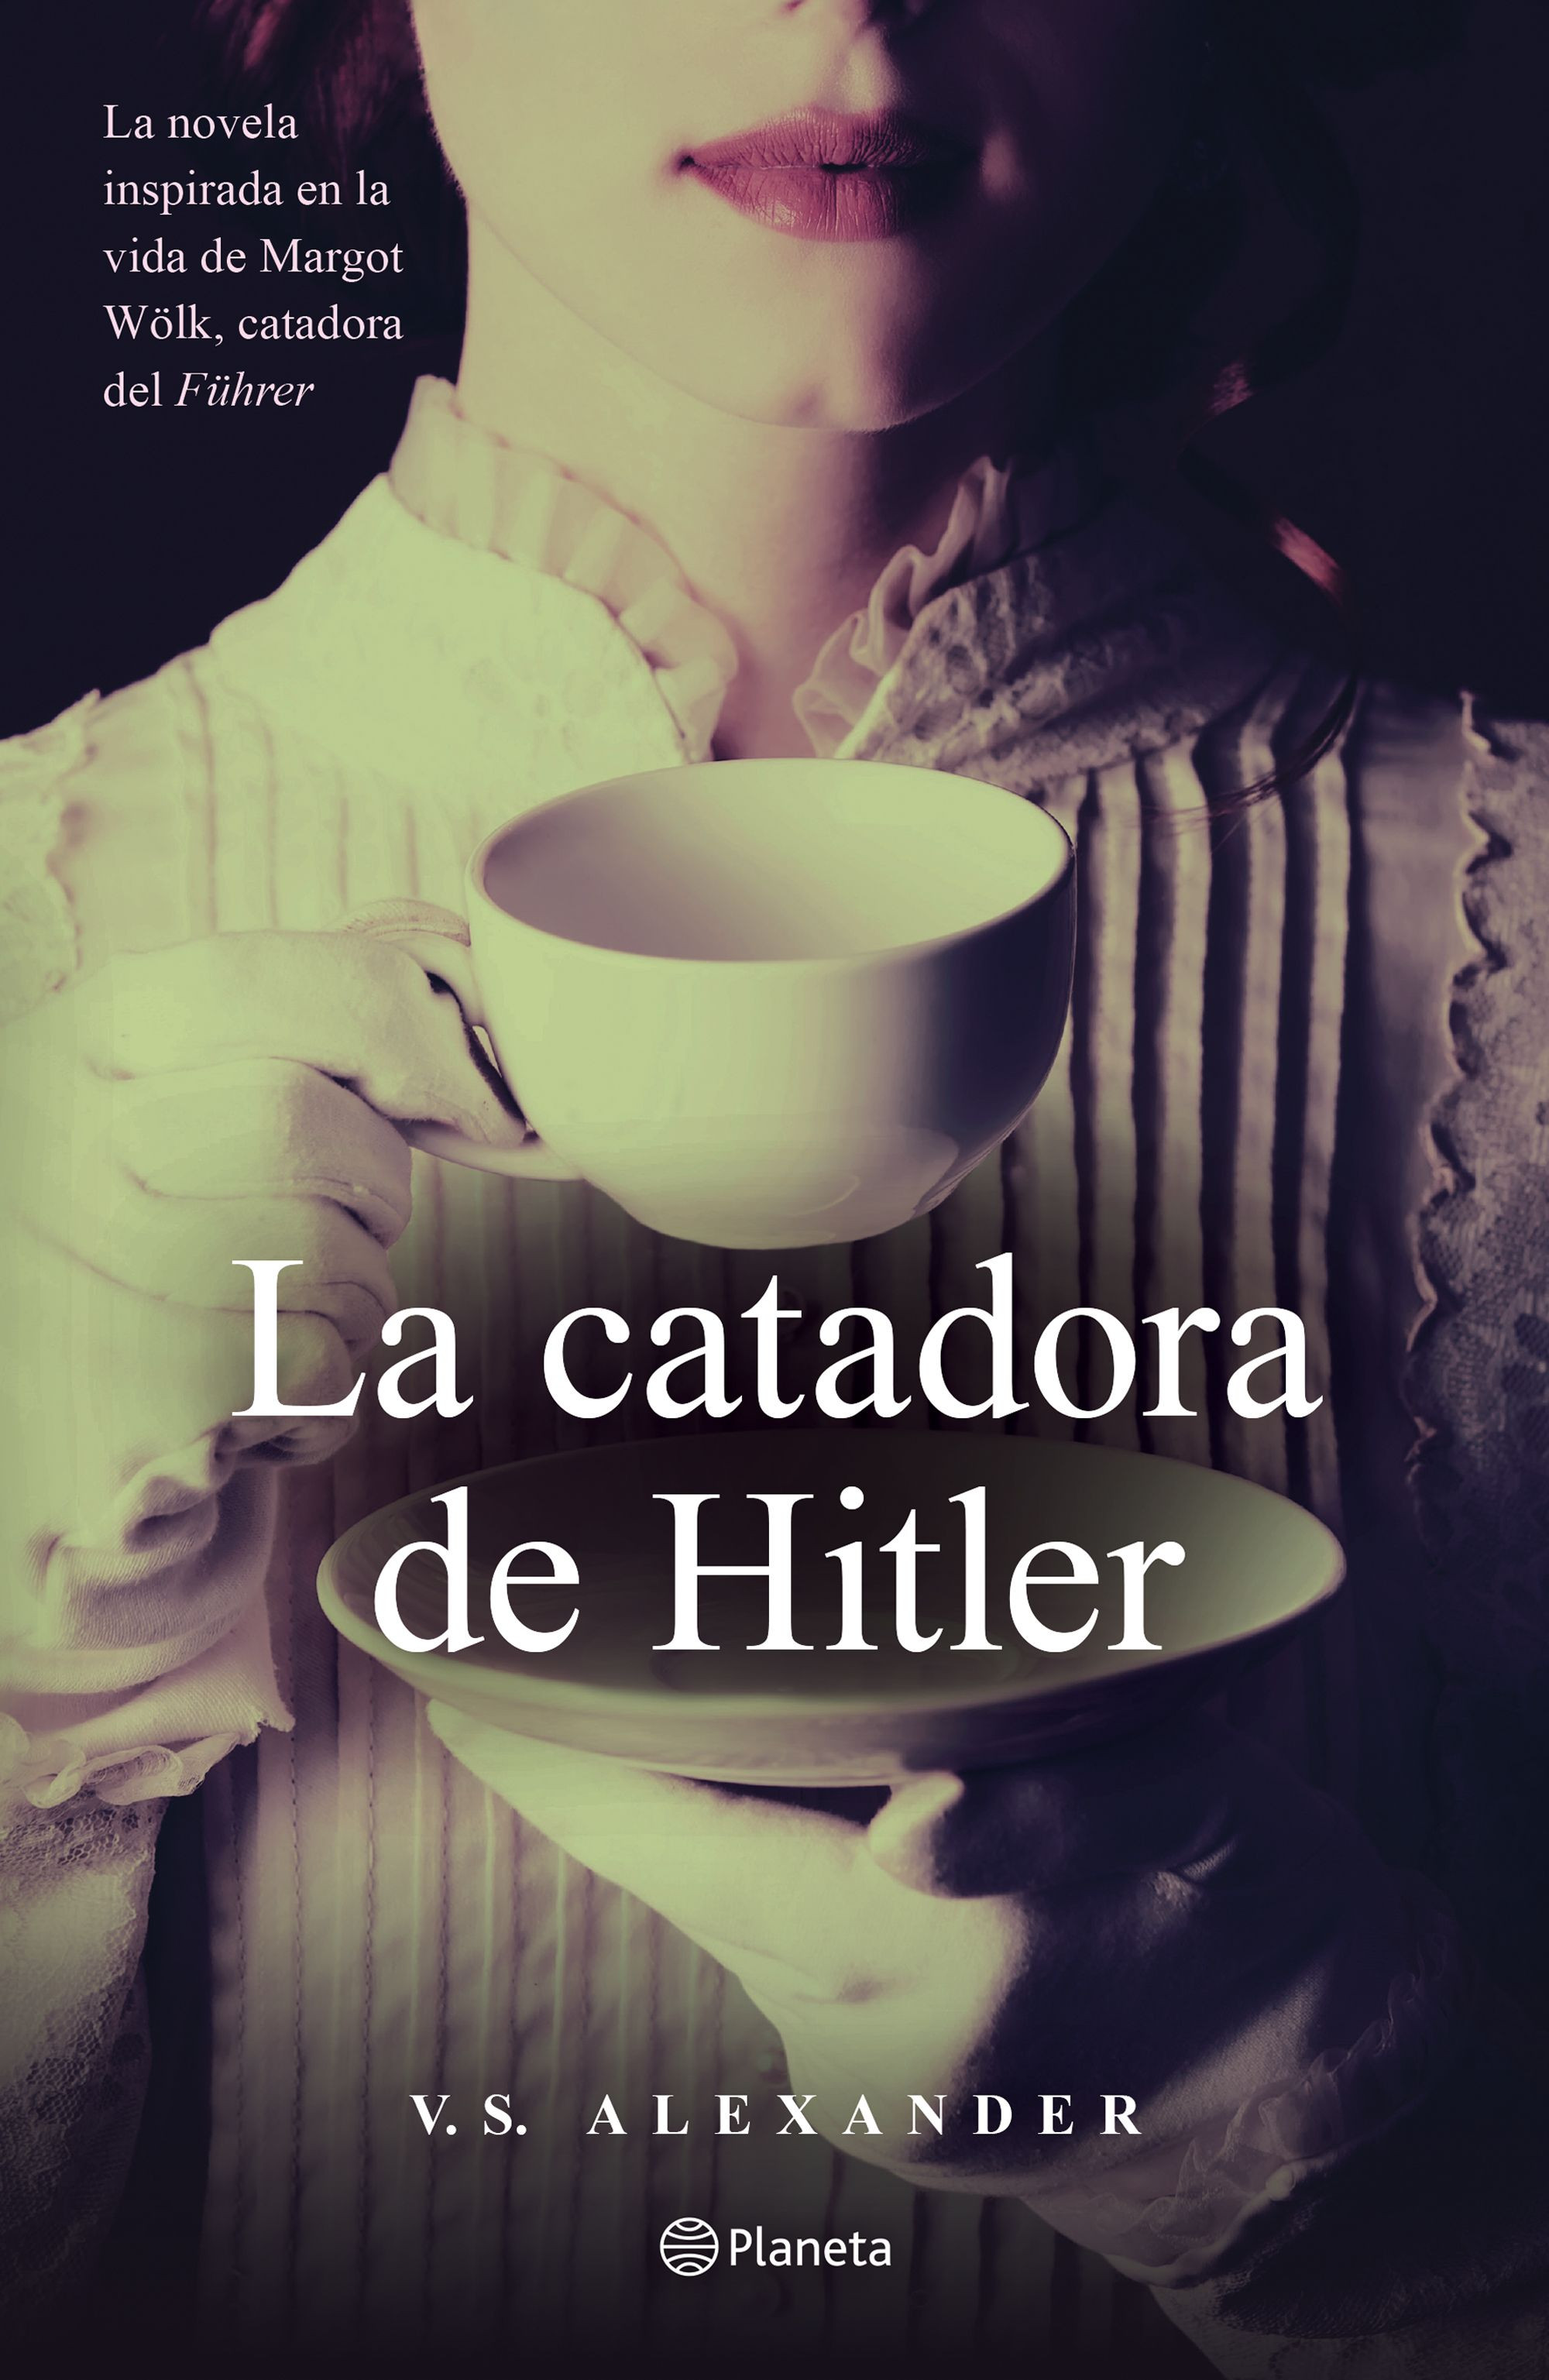 Imagen La Catadora de Hitler. V. S. Alexander 1